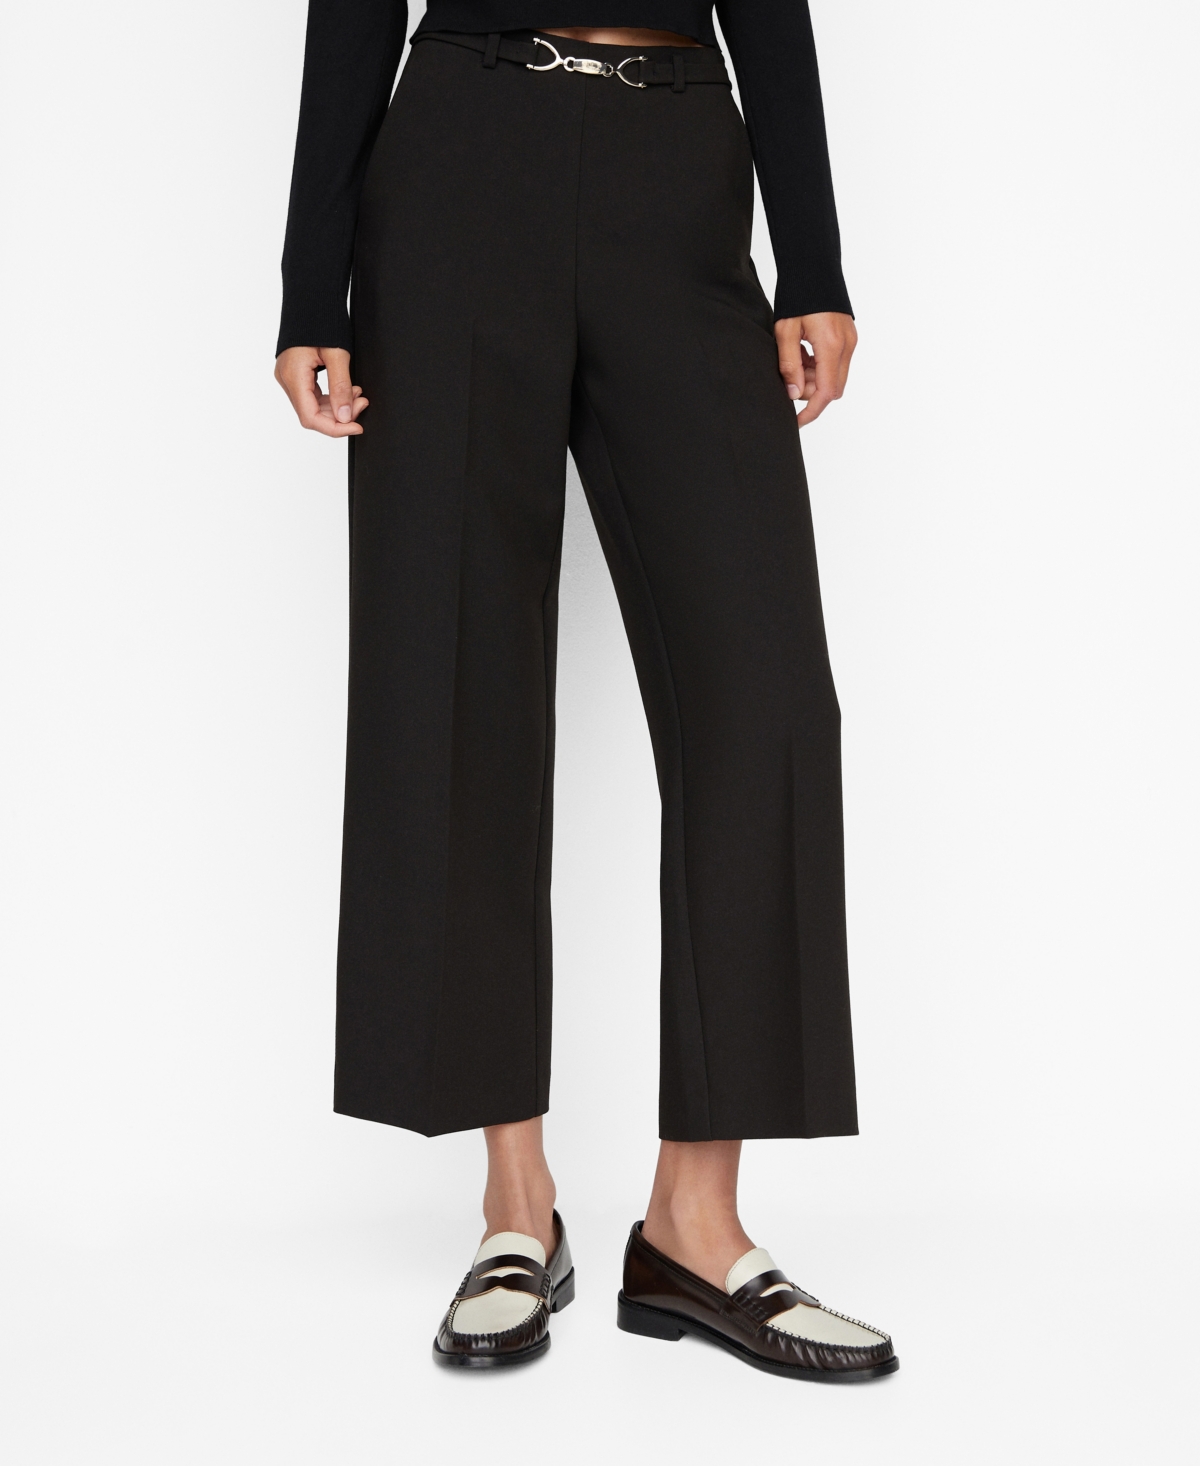 Mango Women's Belt Culottes Trousers - Medium Brown